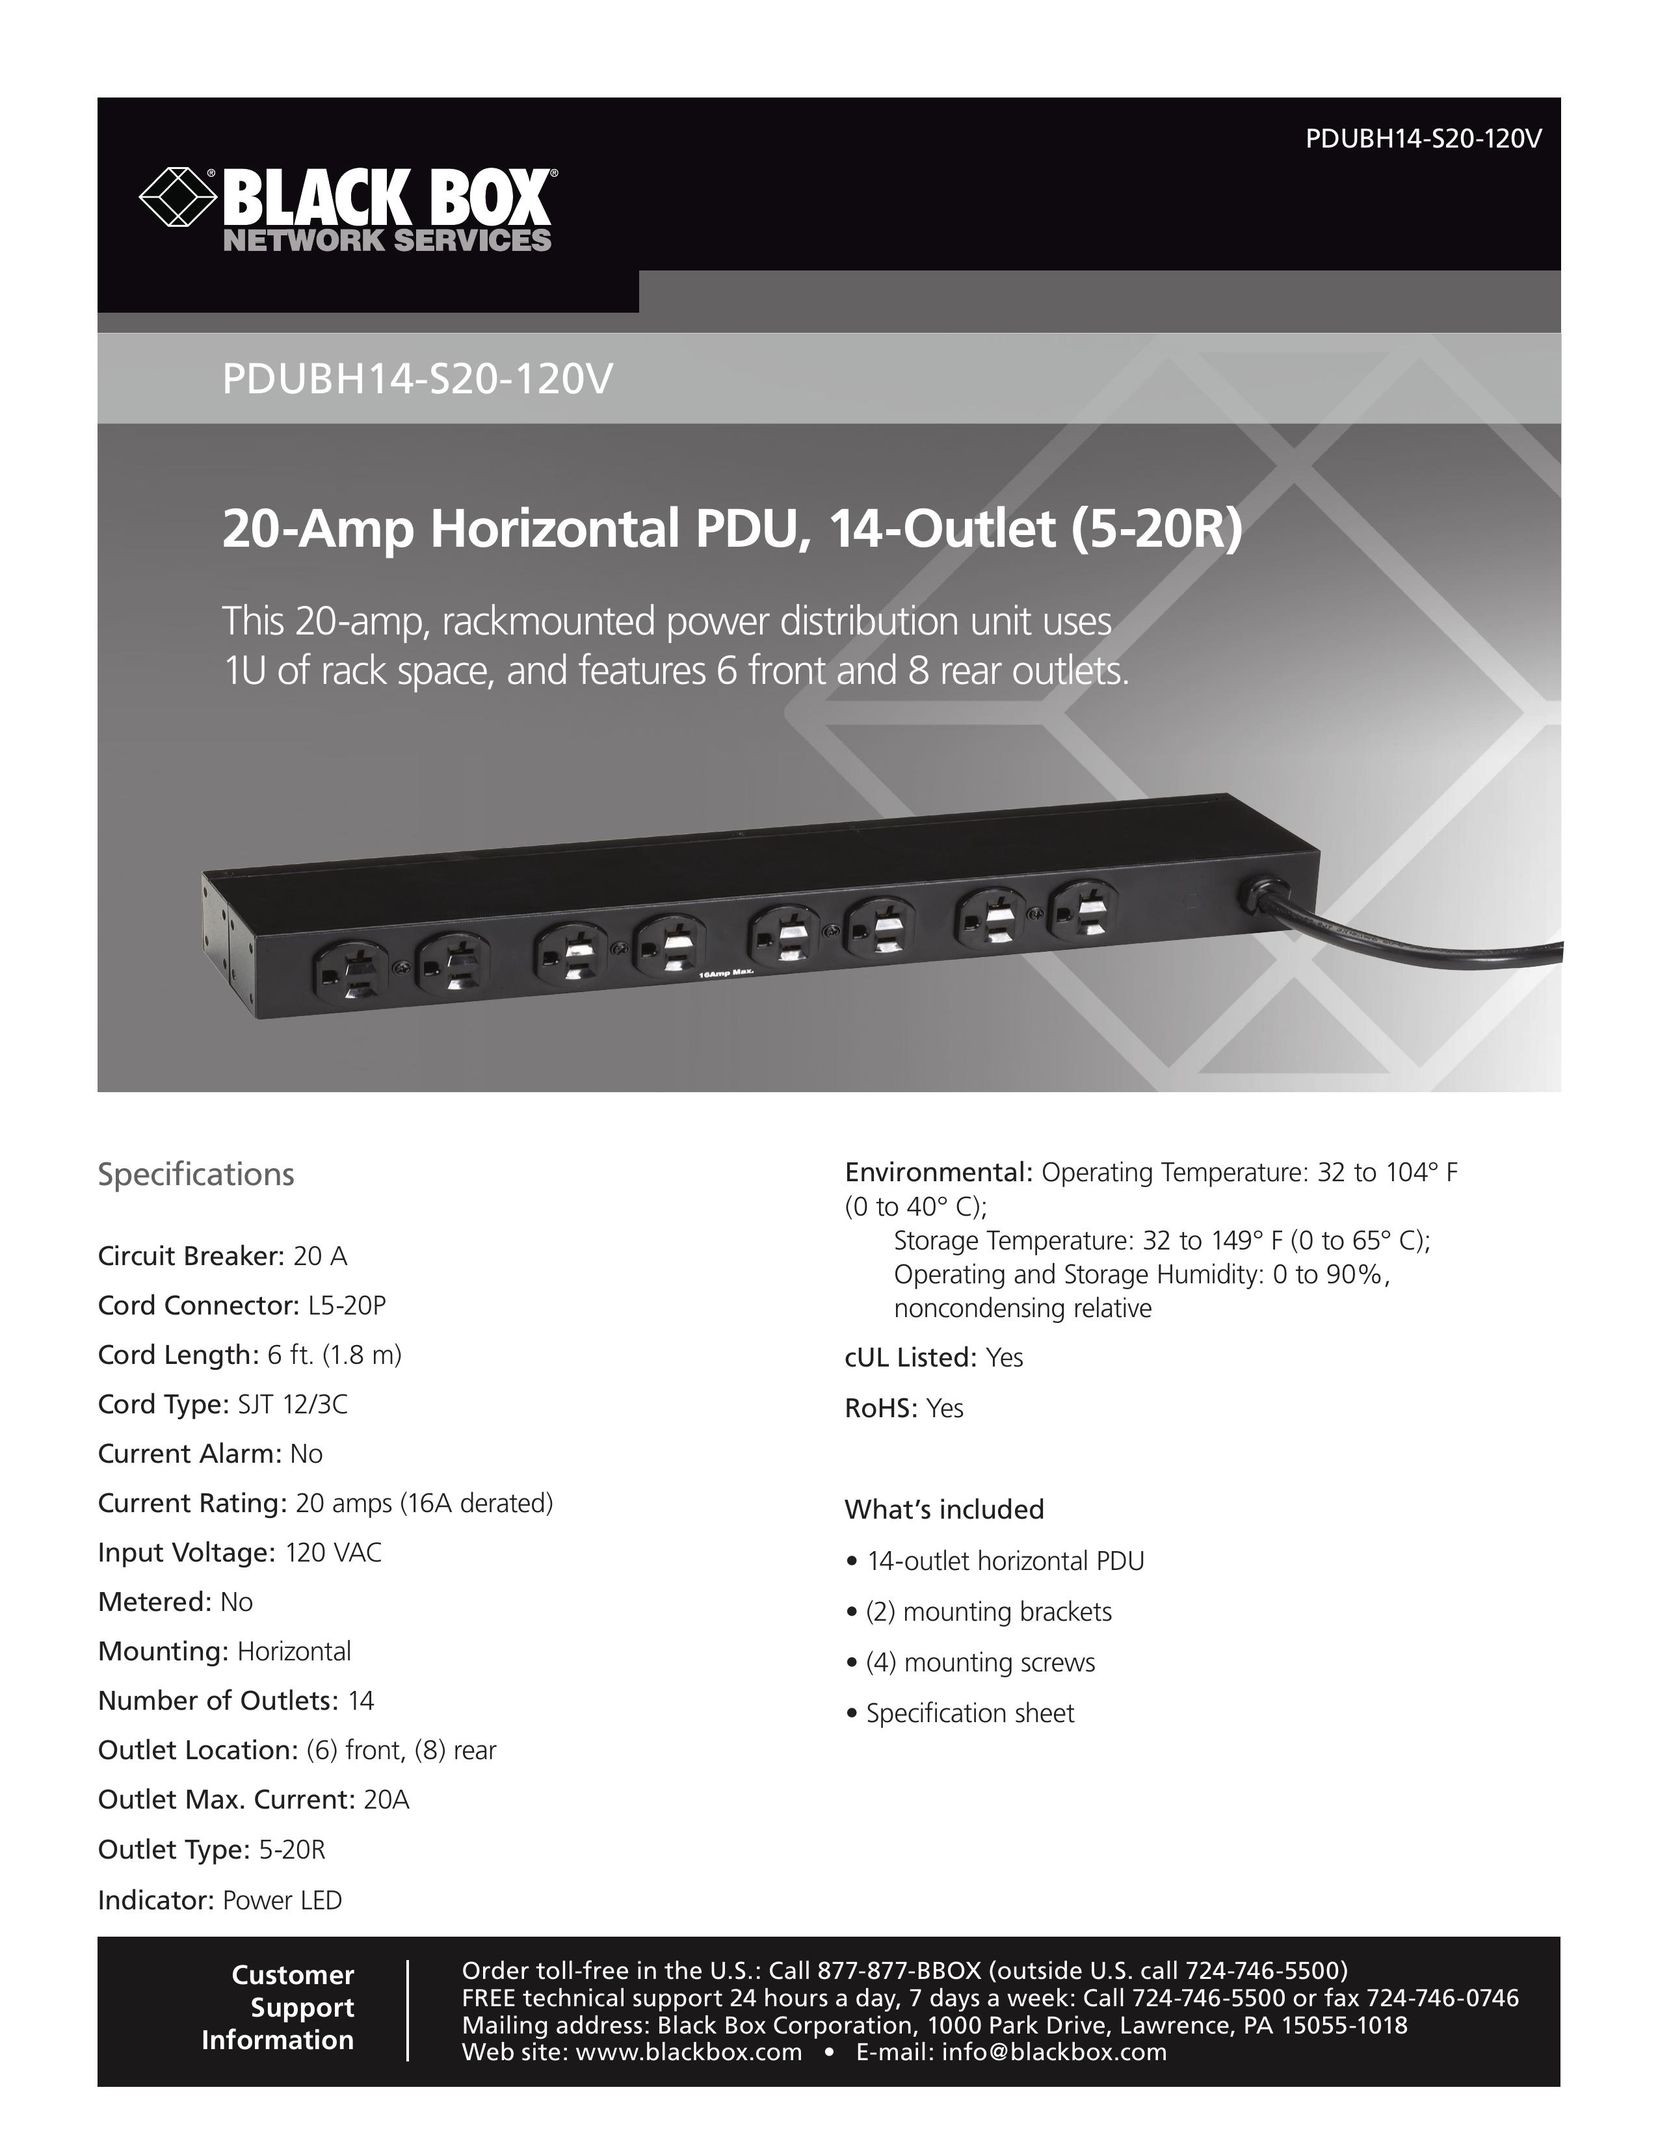 Black Box 20-Amp Horizontal PDU, 14 Outlet (5-20R) Power Supply User Manual